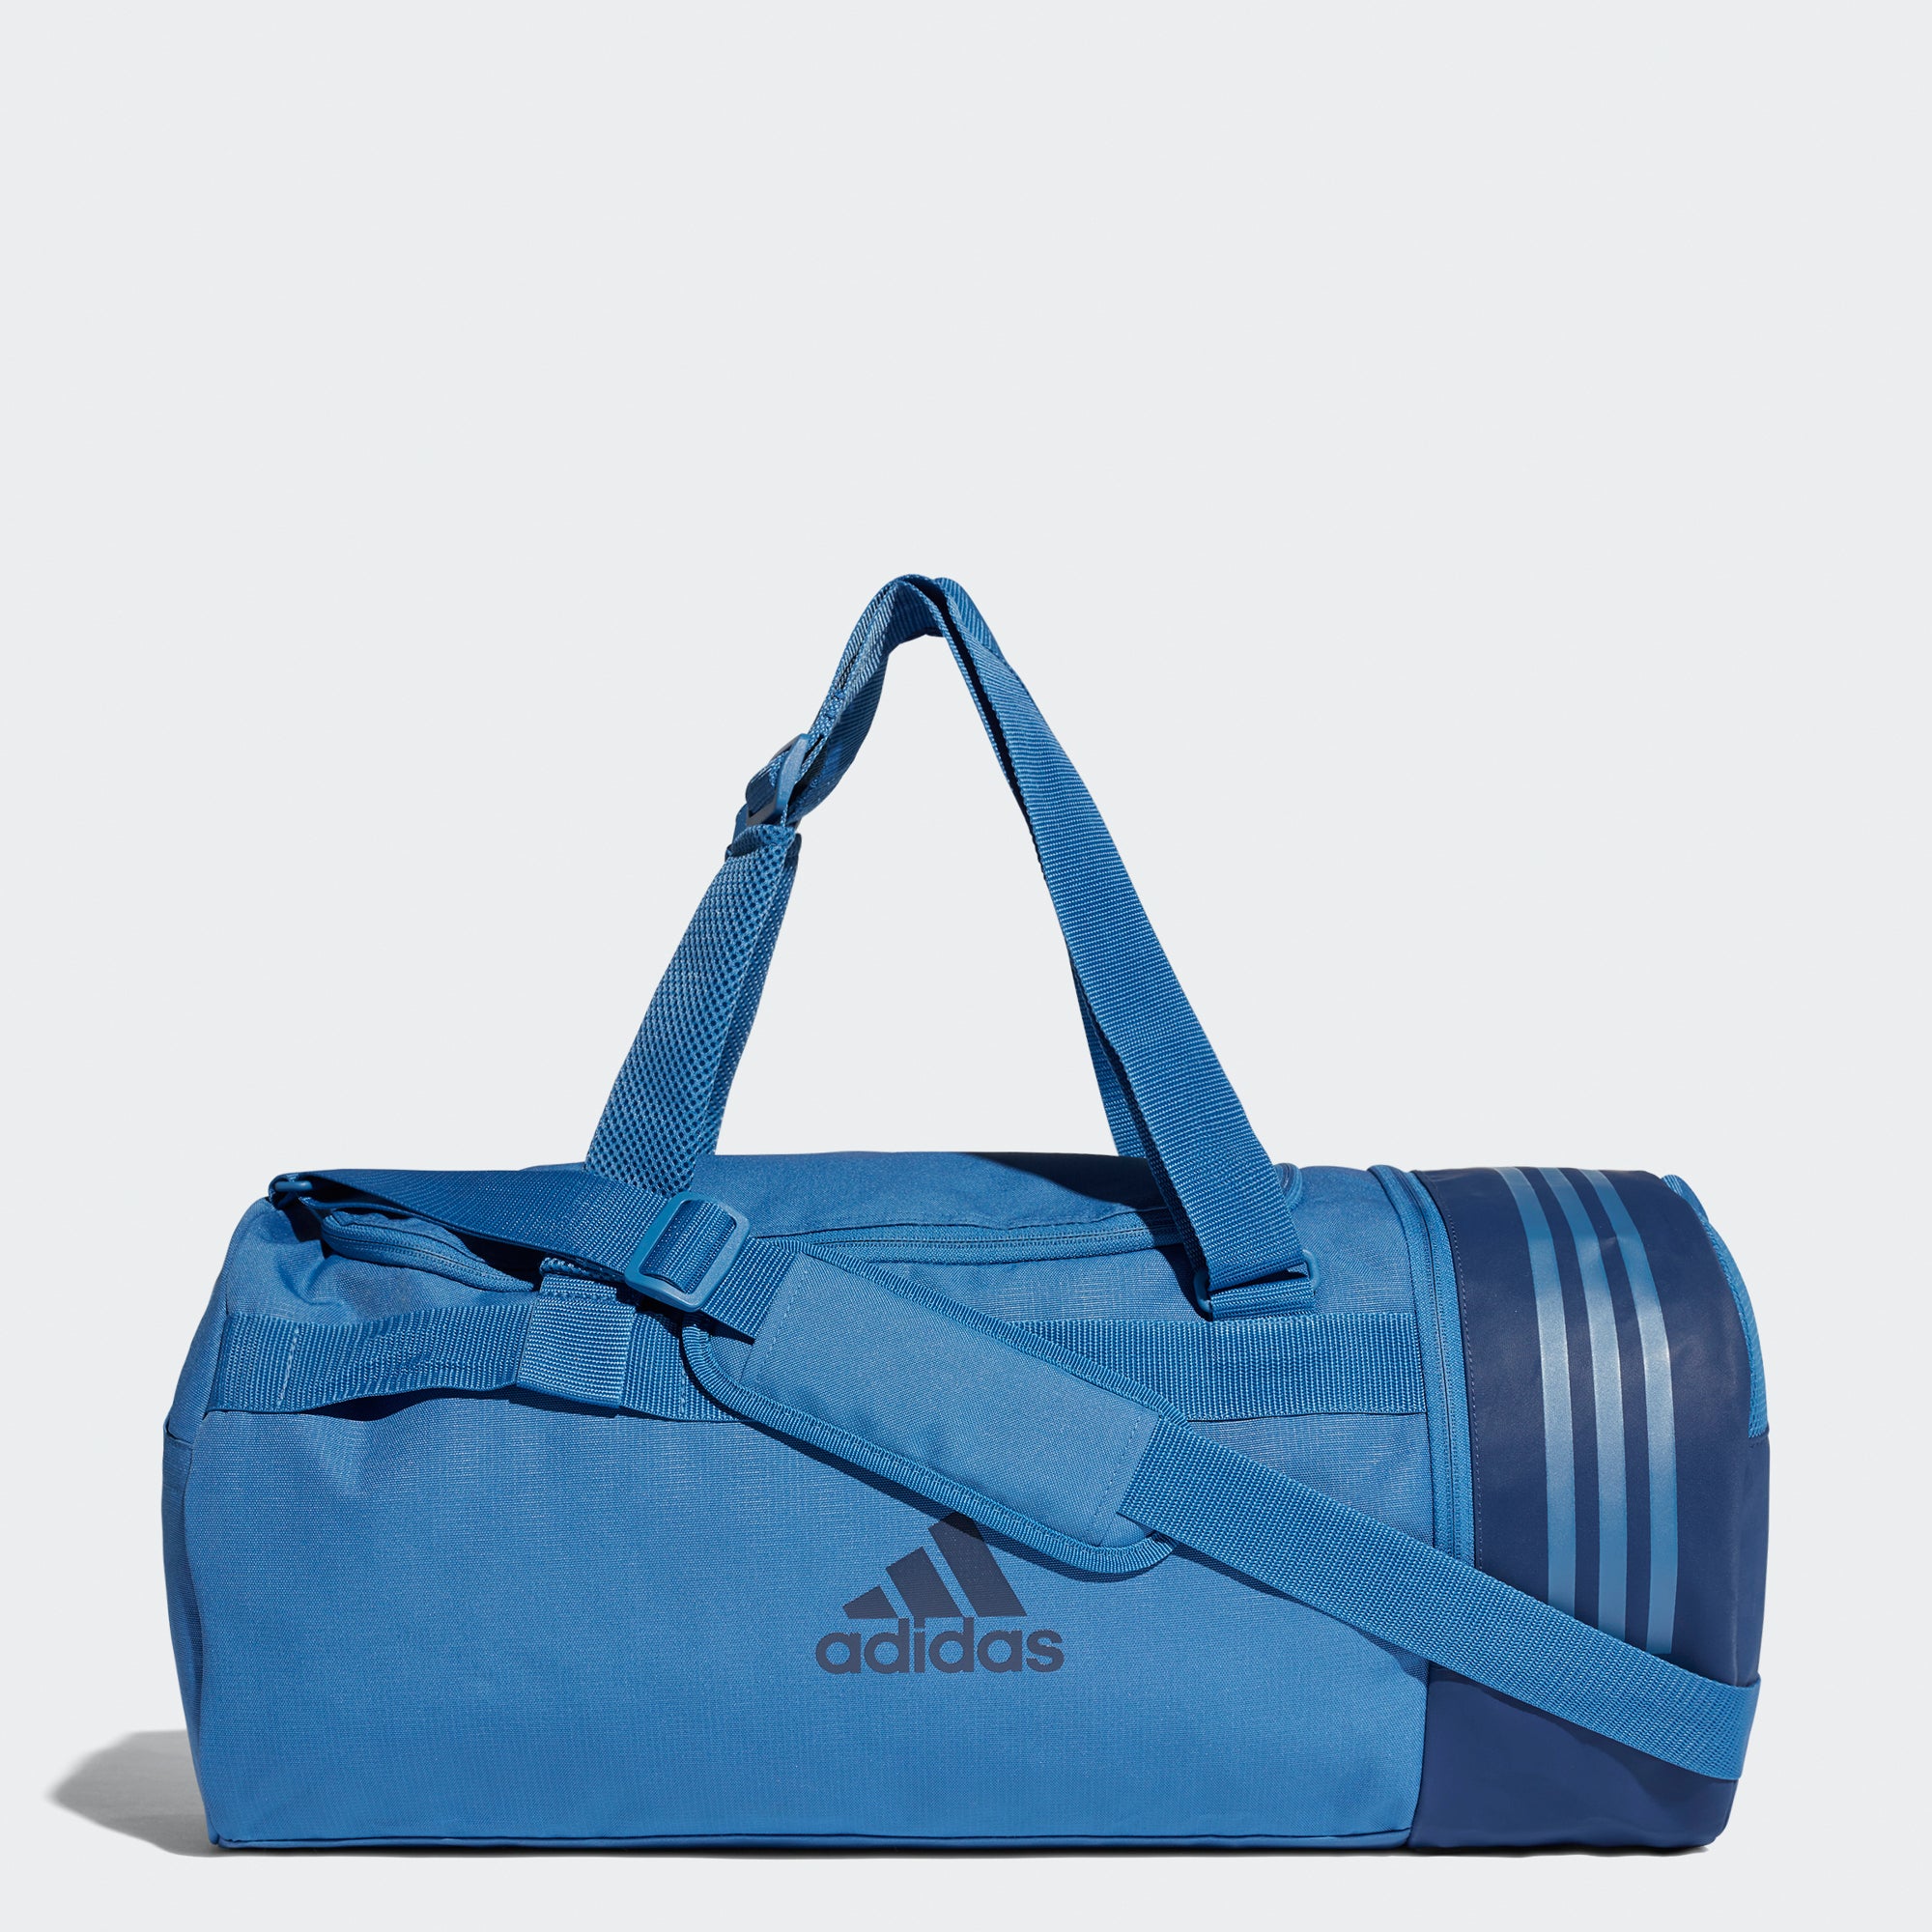 adidas duffle bag blue